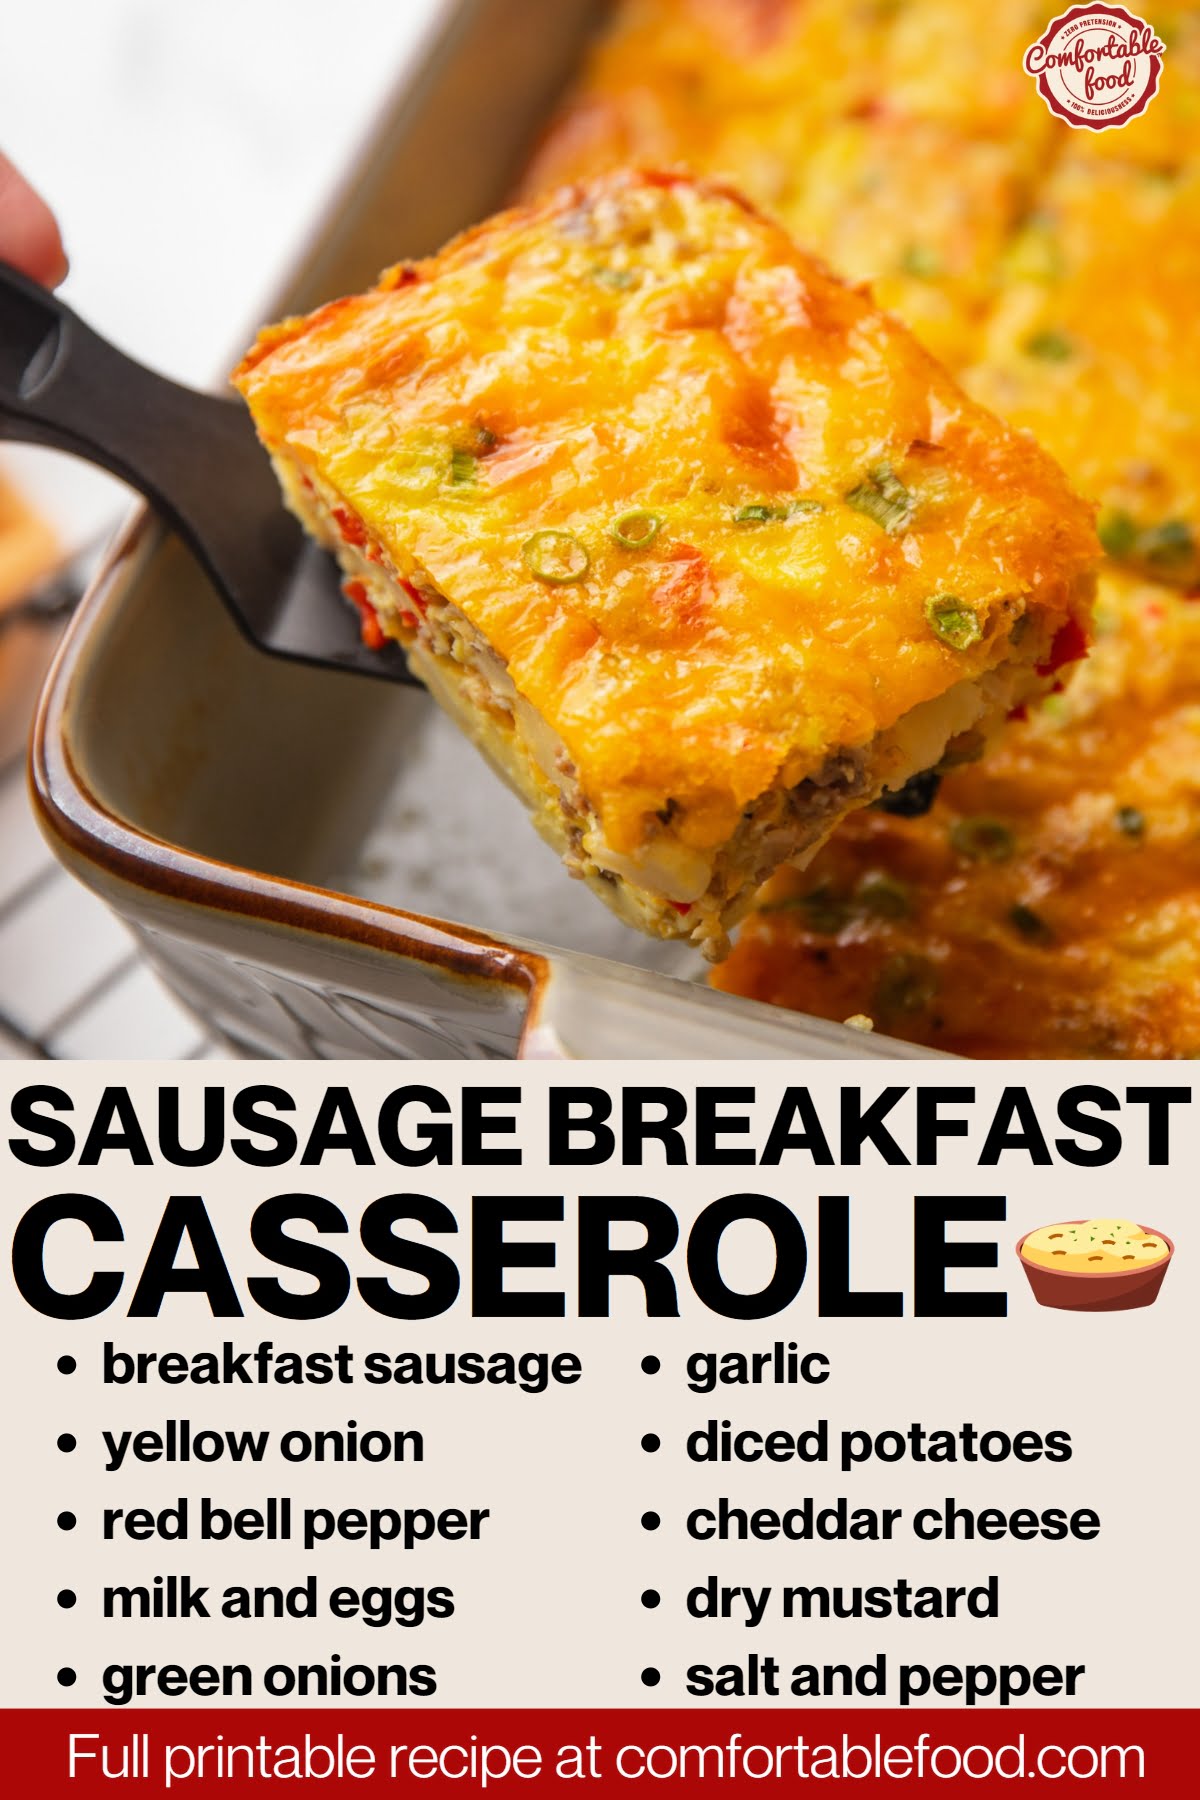 Sausage breakfast casserole socials